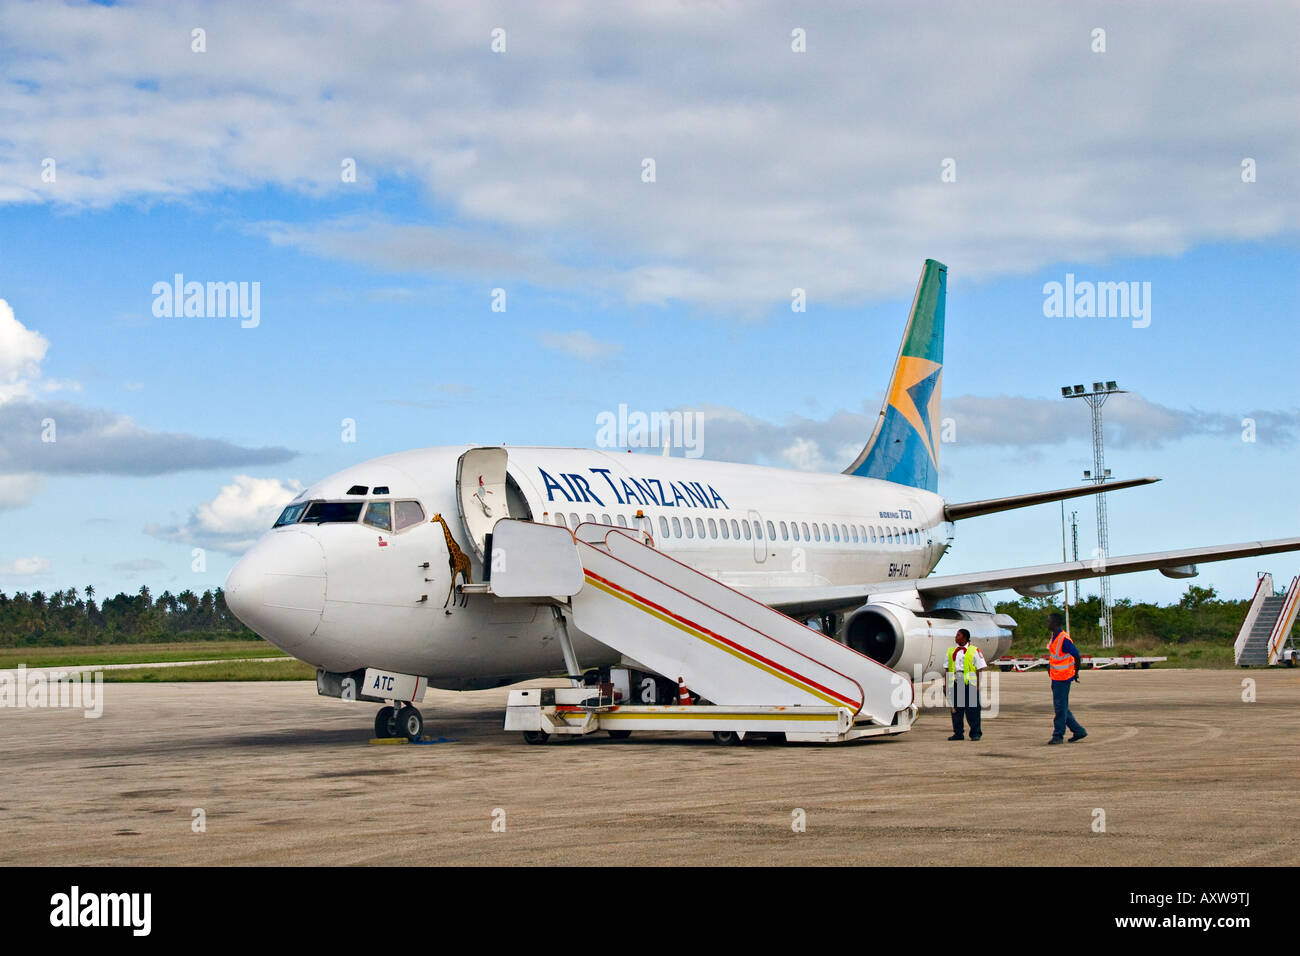 Air Tanzania airplane at the Zanzibar International Airport, Tanzania, Africa Stock Photo